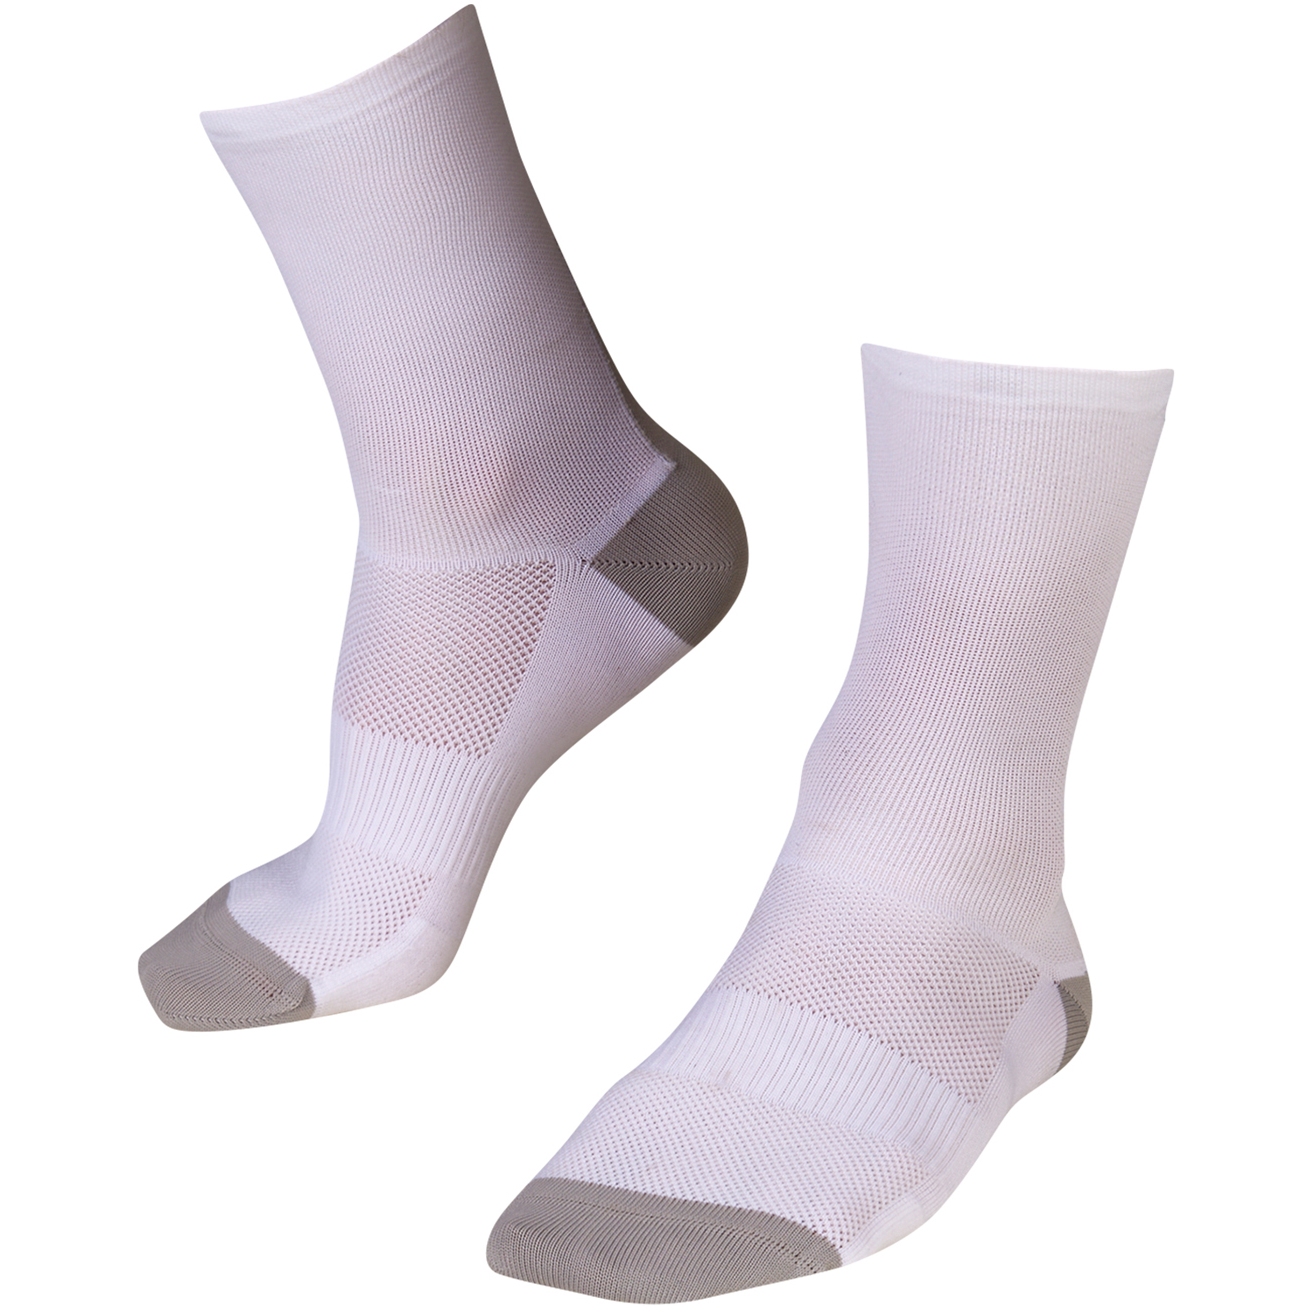 Picture of Bioracer Classic Socks - white/light grey